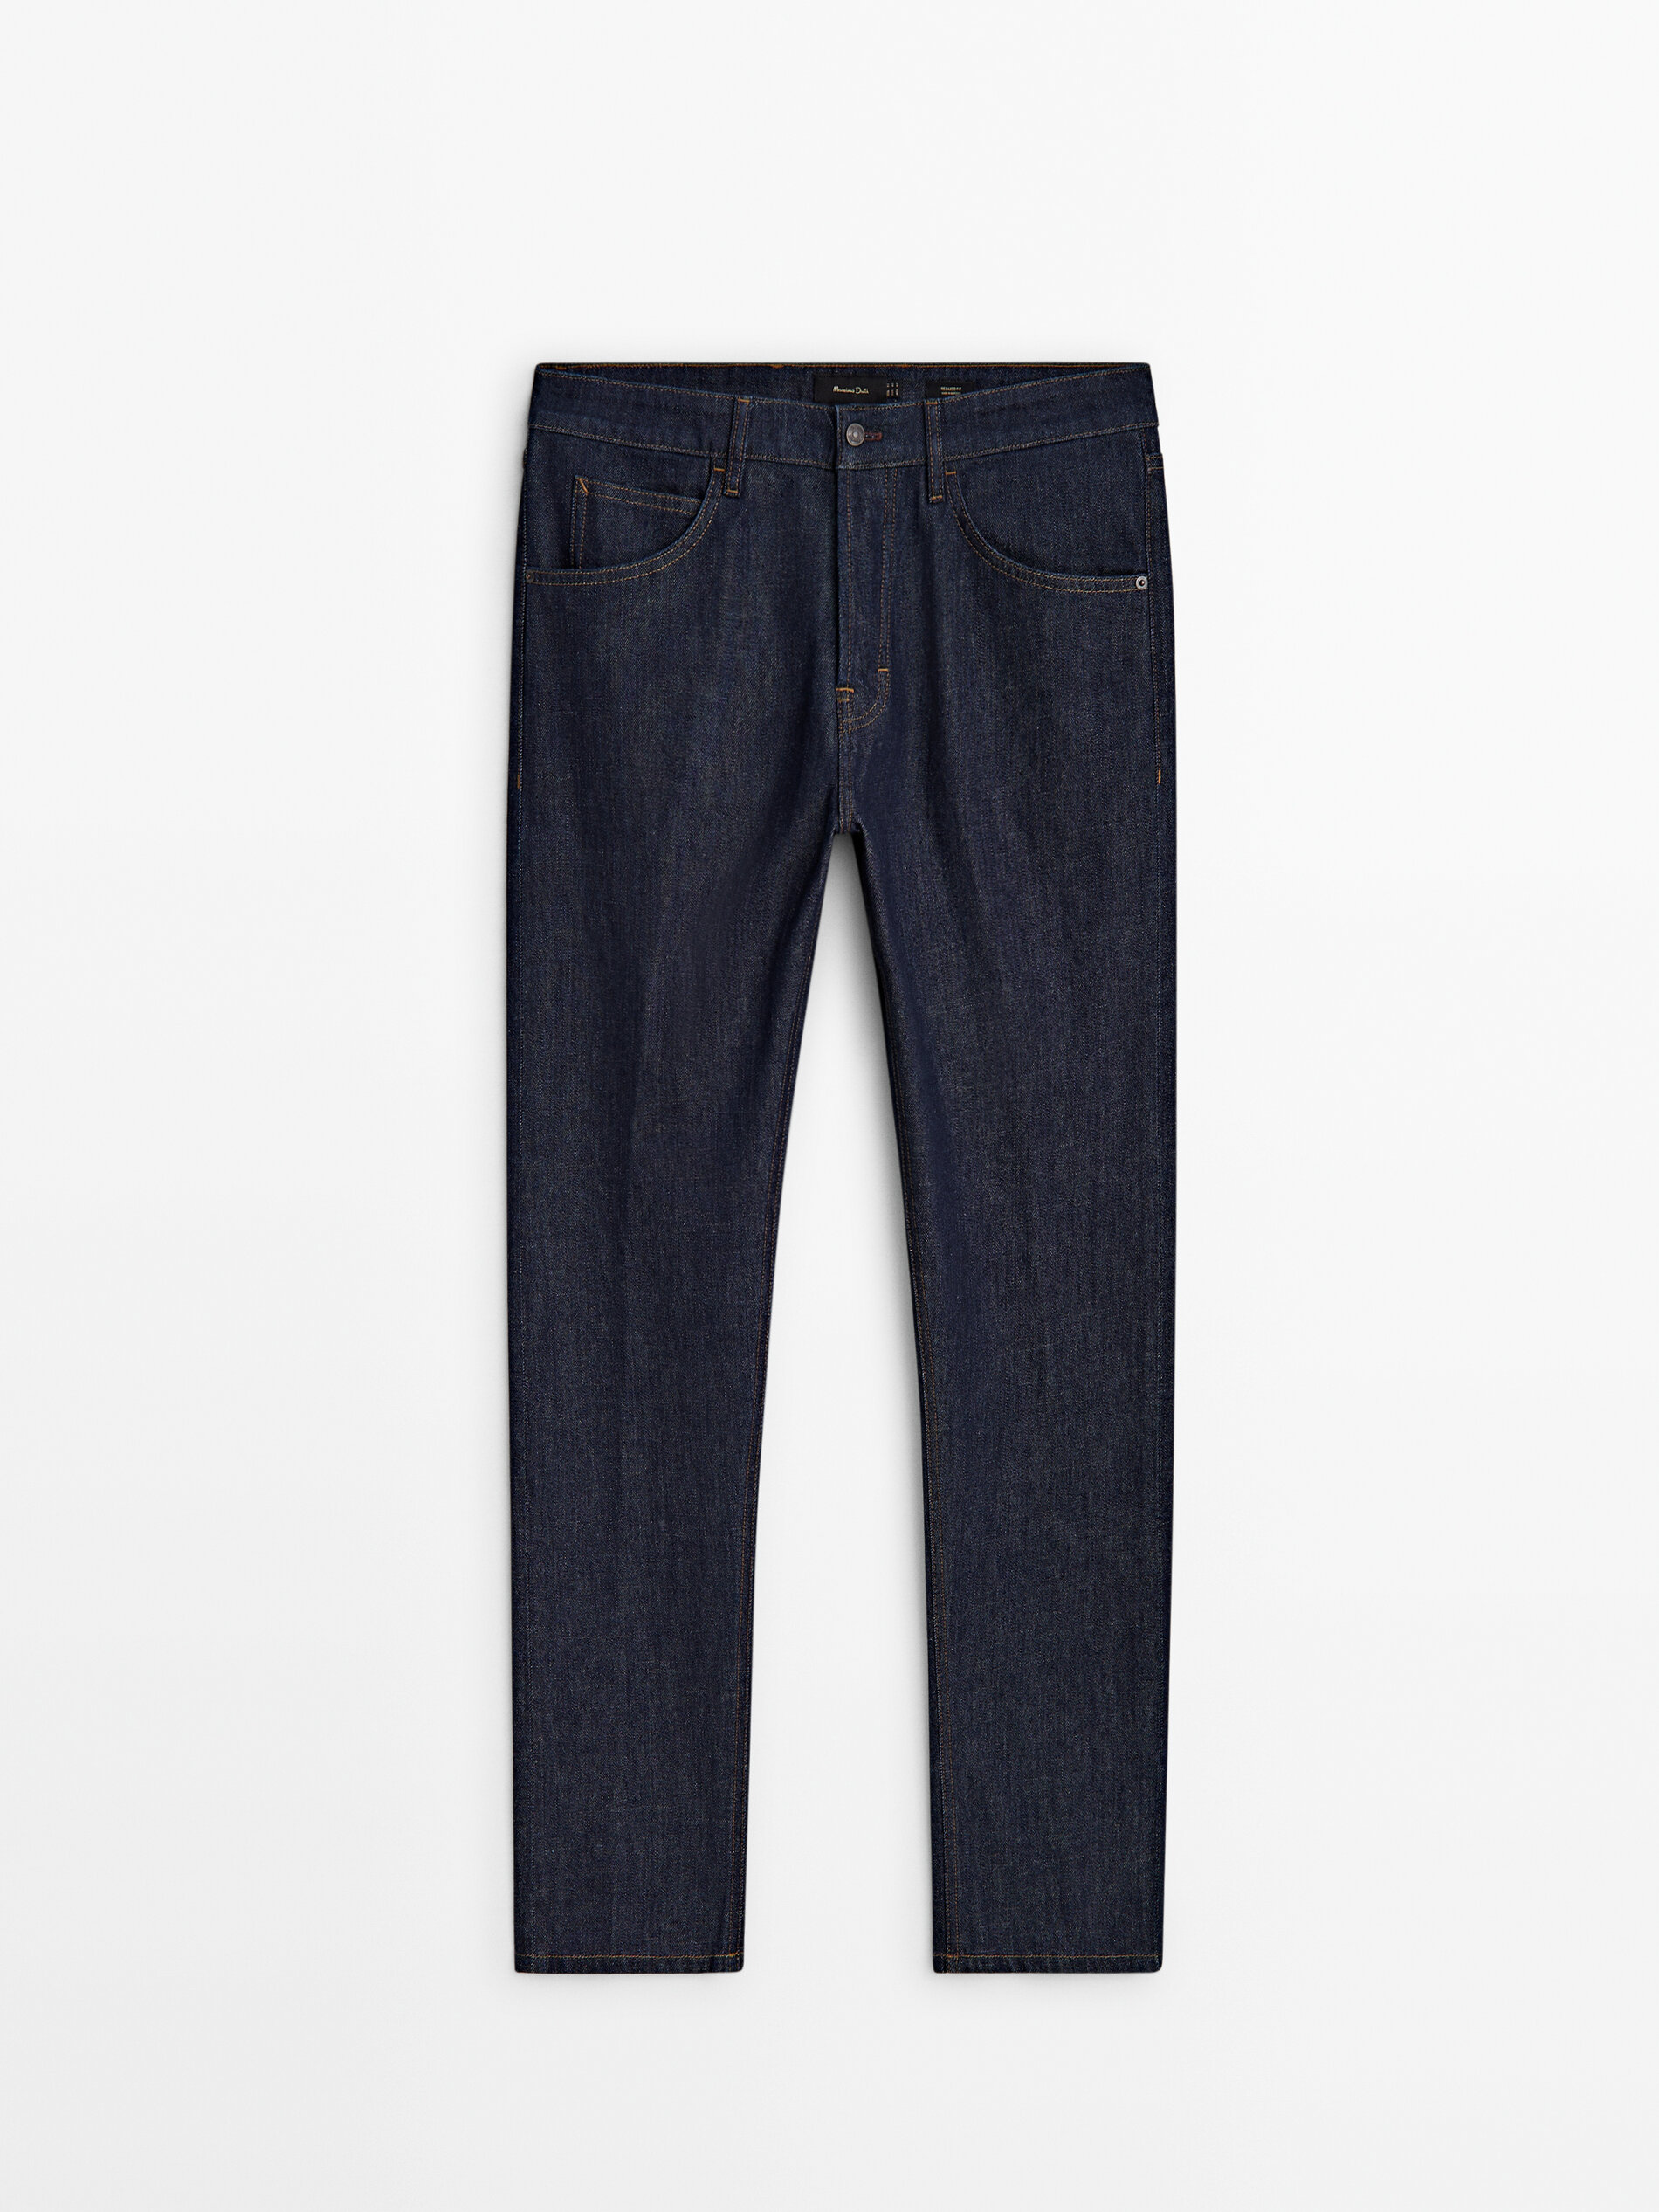 Men's Rugged Flex Relaxed 5 Pocket Jean | Carhartt 103889